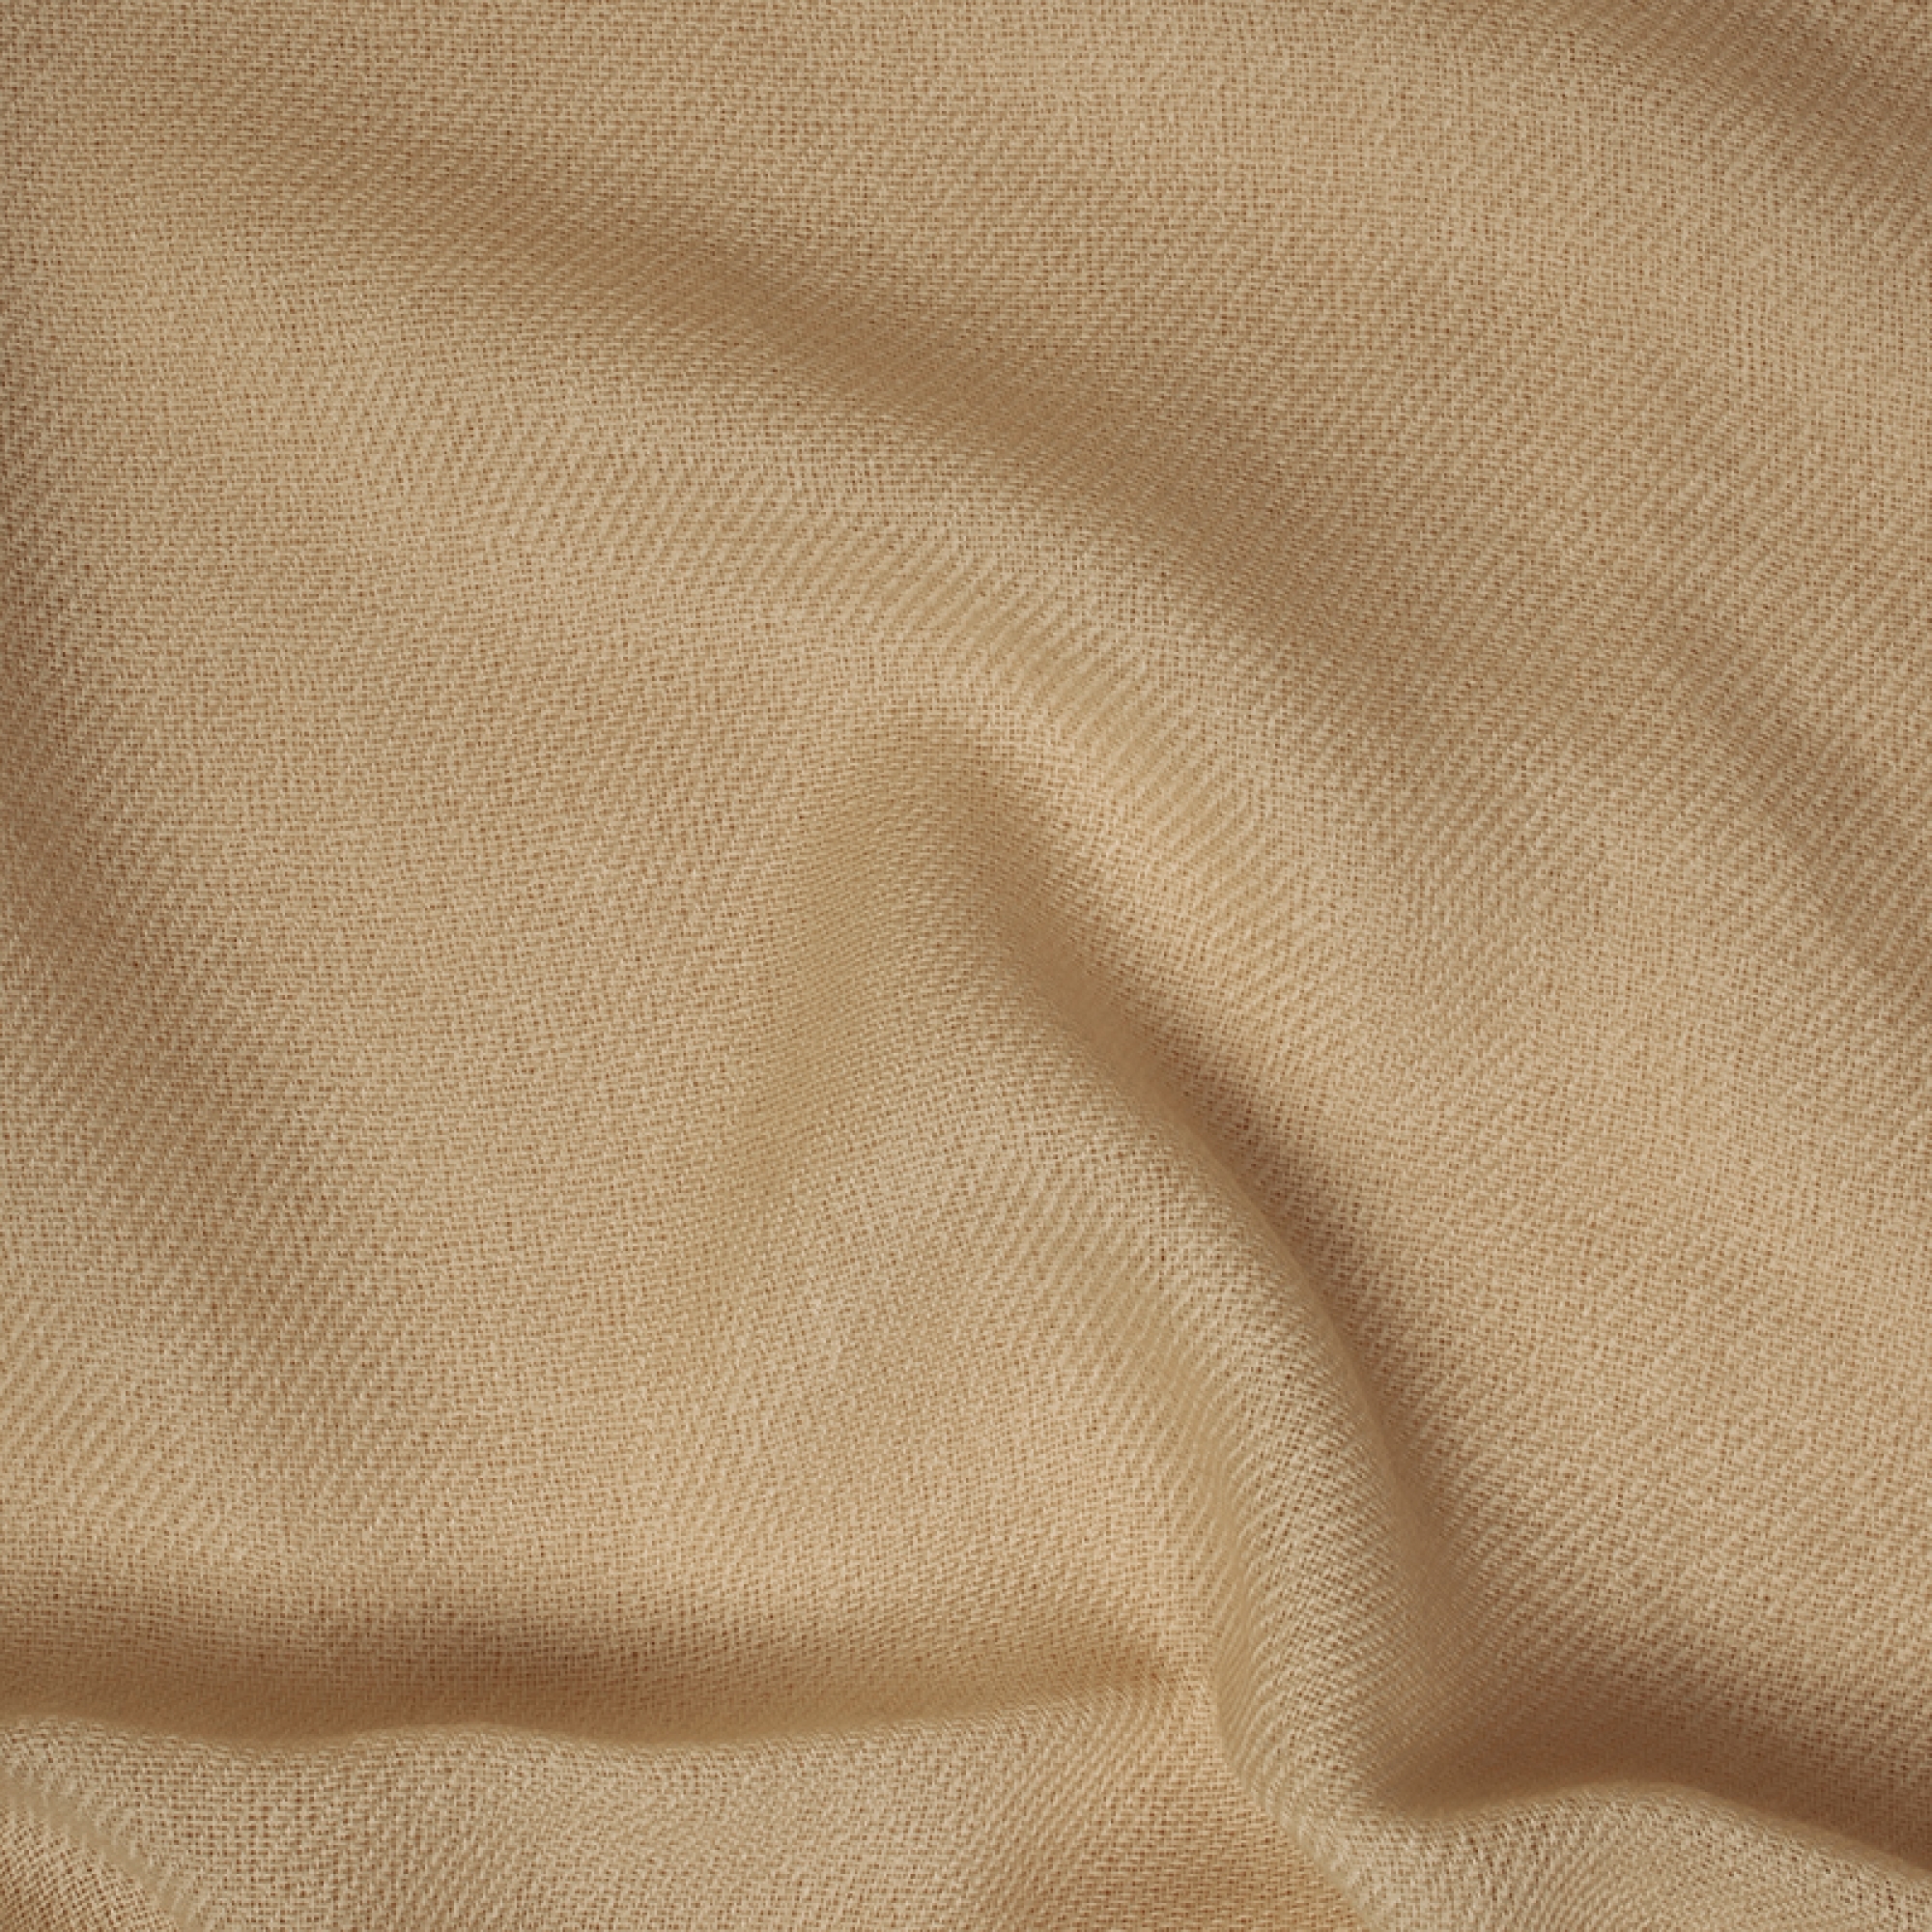 Cashmere accessories blanket frisbi 147 x 203 white smocke 147 x 203 cm